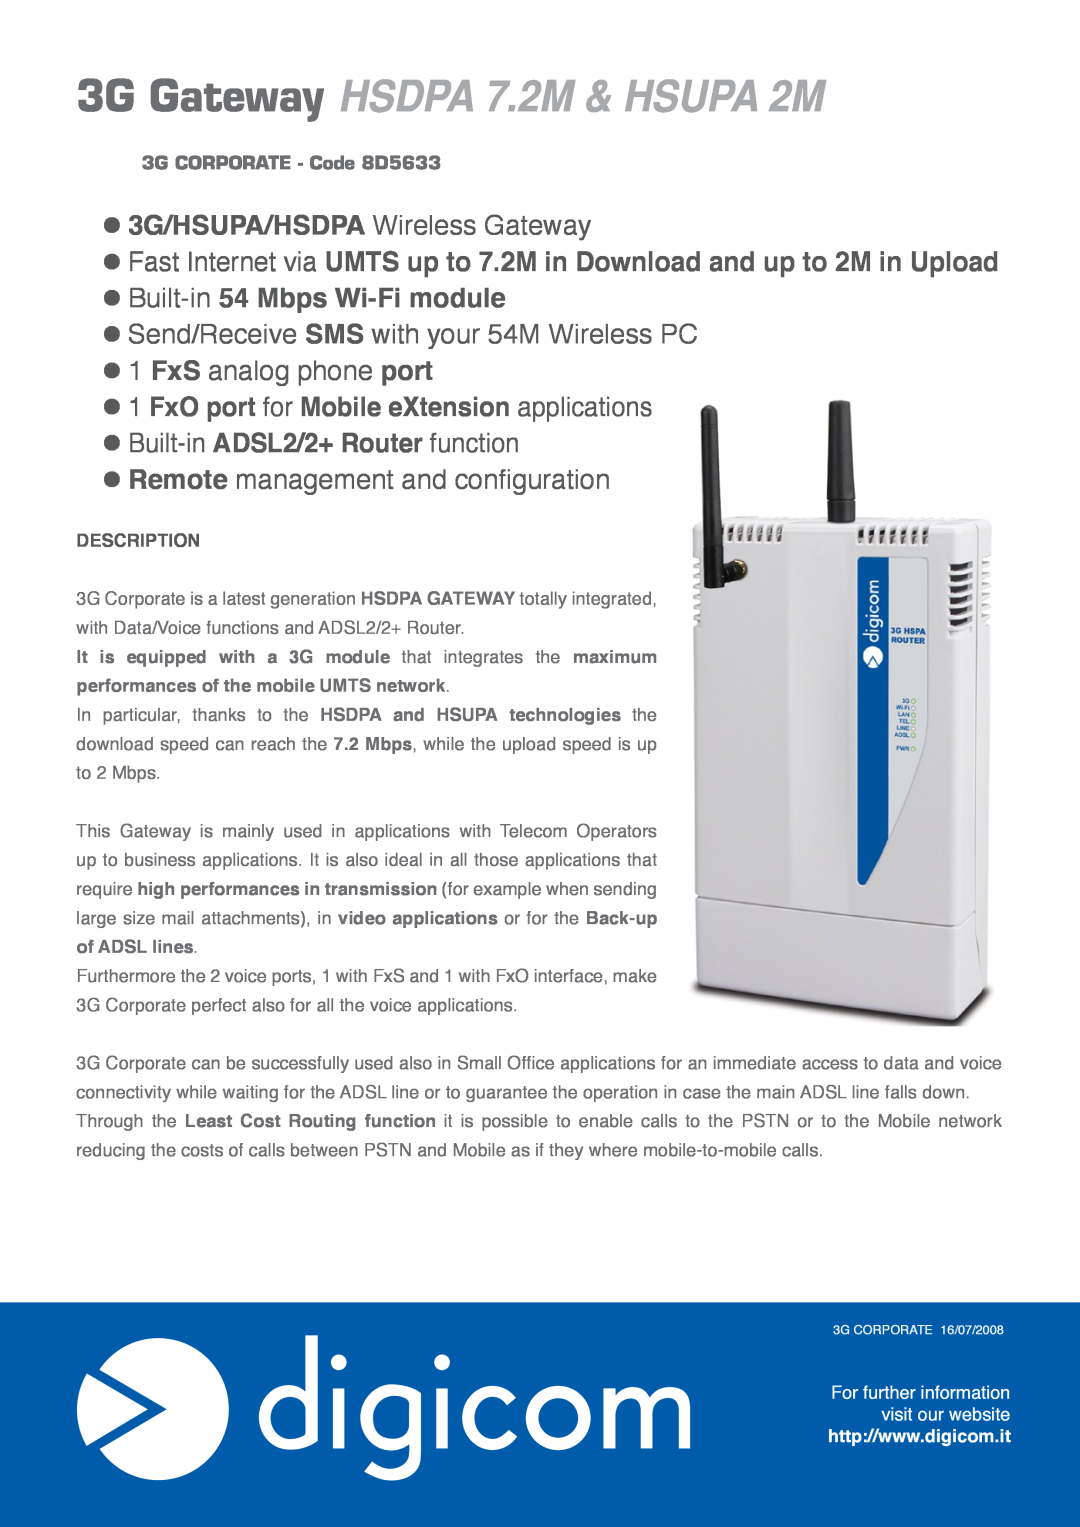 Digicom manual For further information, 3G Gateway HSDPA 7.2M & HSUPA 2M, 3G/HSUPA/HSDPA Wireless Gateway, Description 